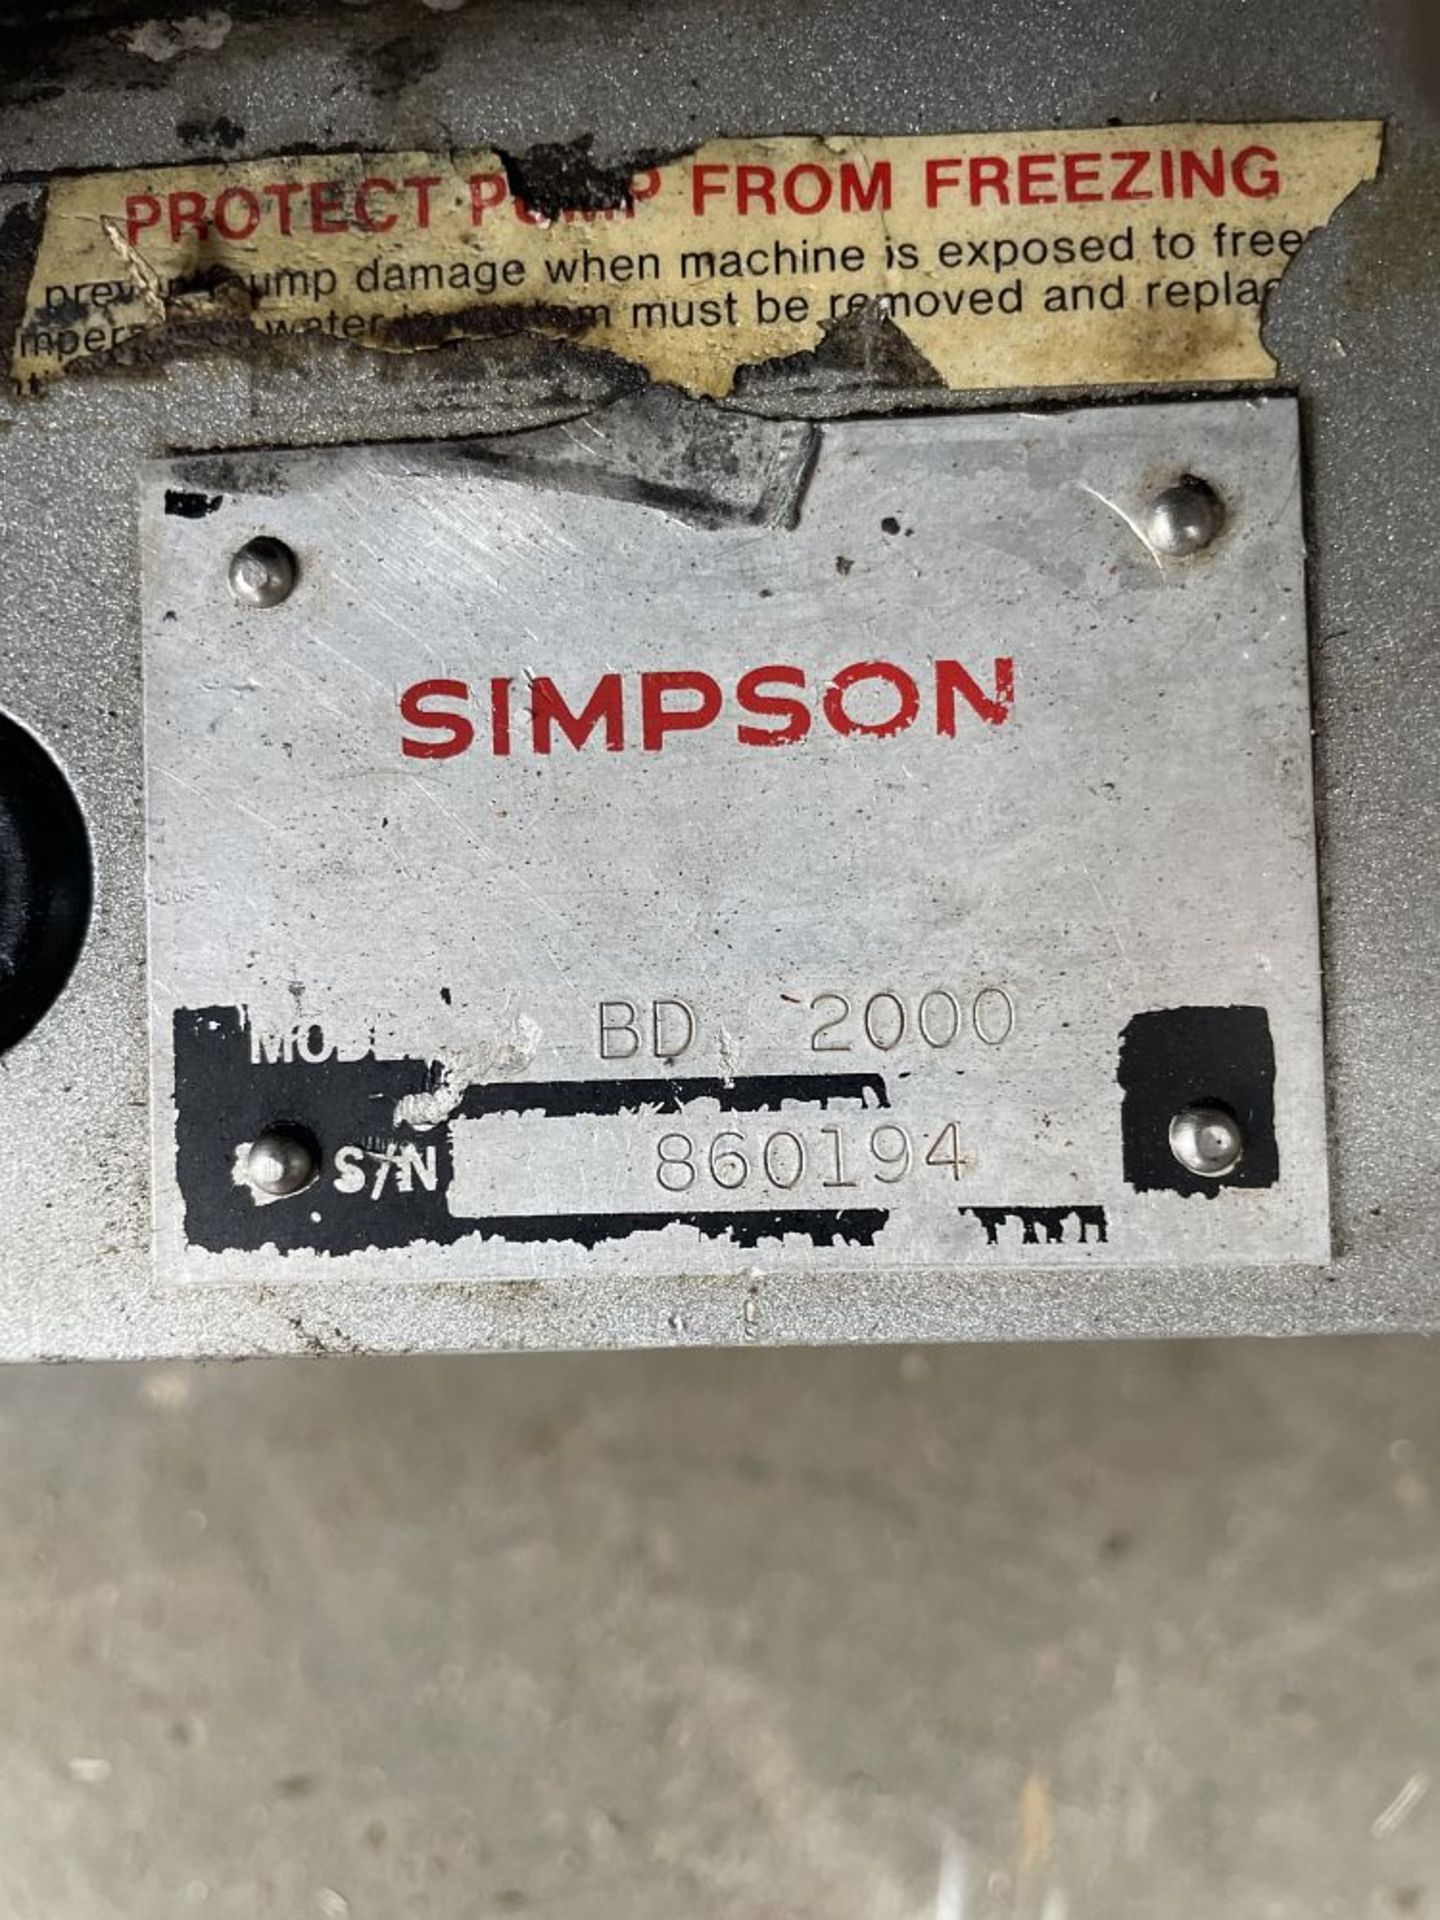 Simpson Pressure Washer (needs repair) - Image 3 of 3